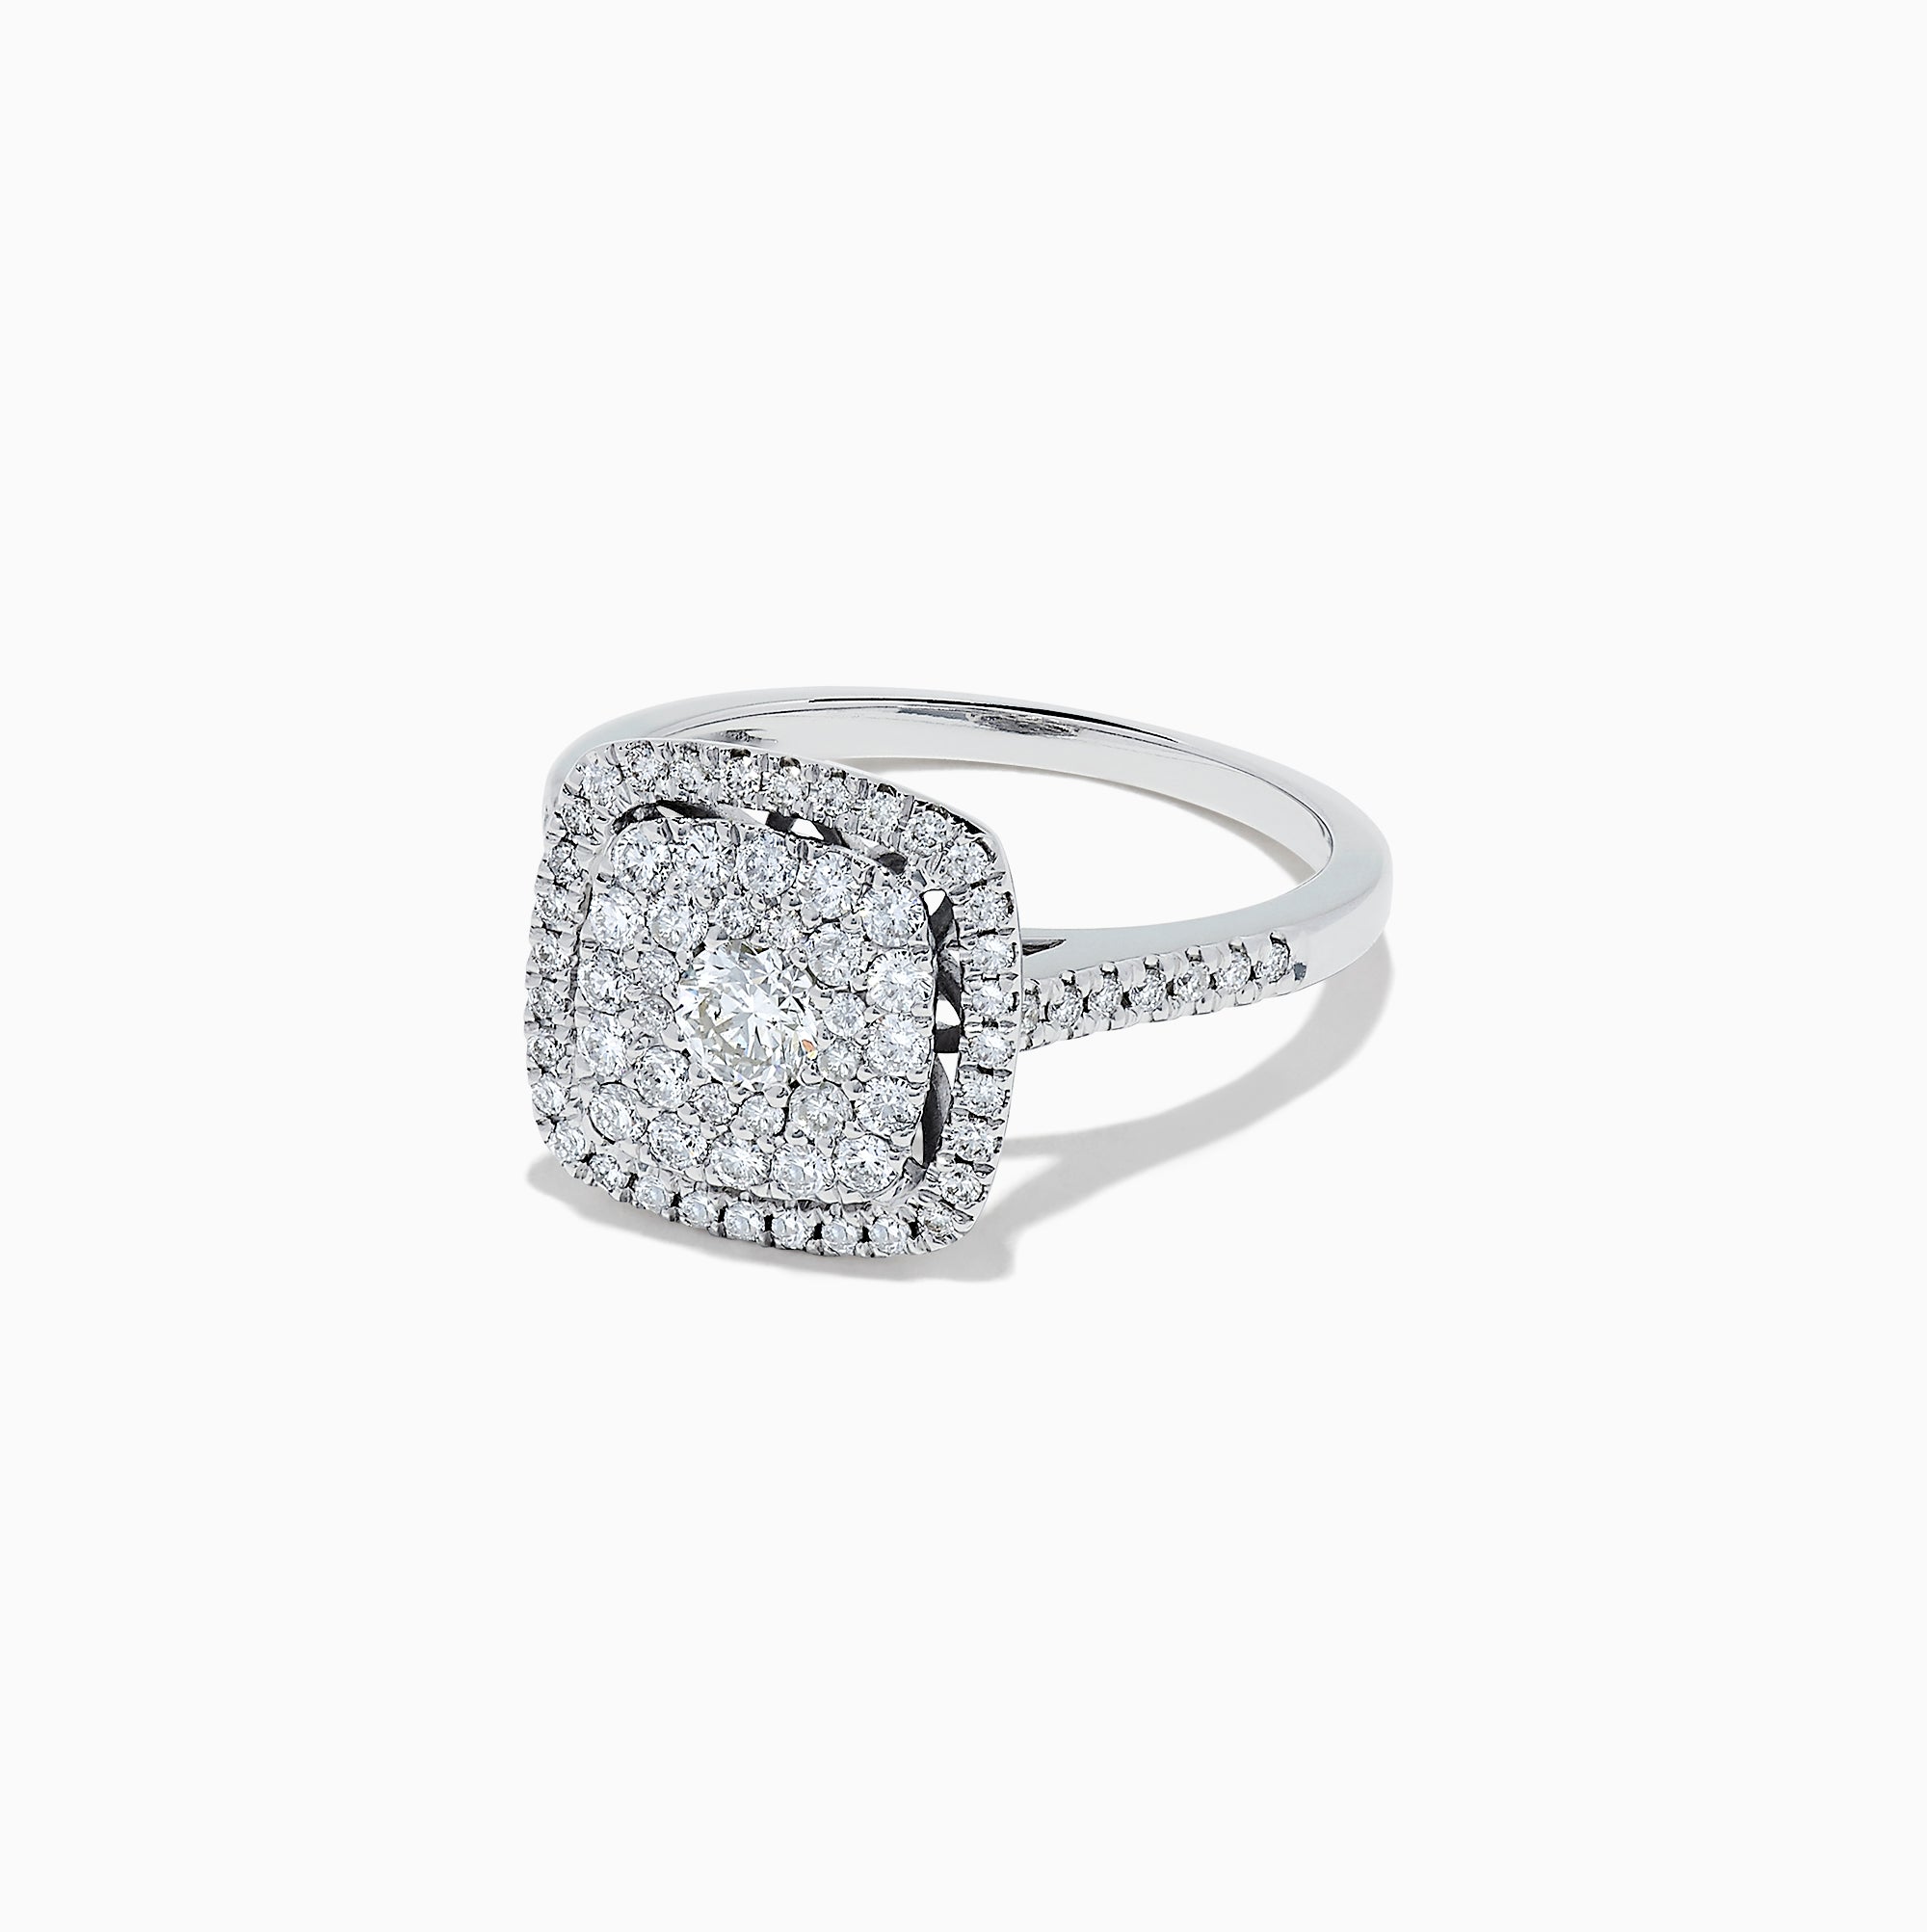 Effy Pave Classica 14K White Gold Diamond Ring, 0.83